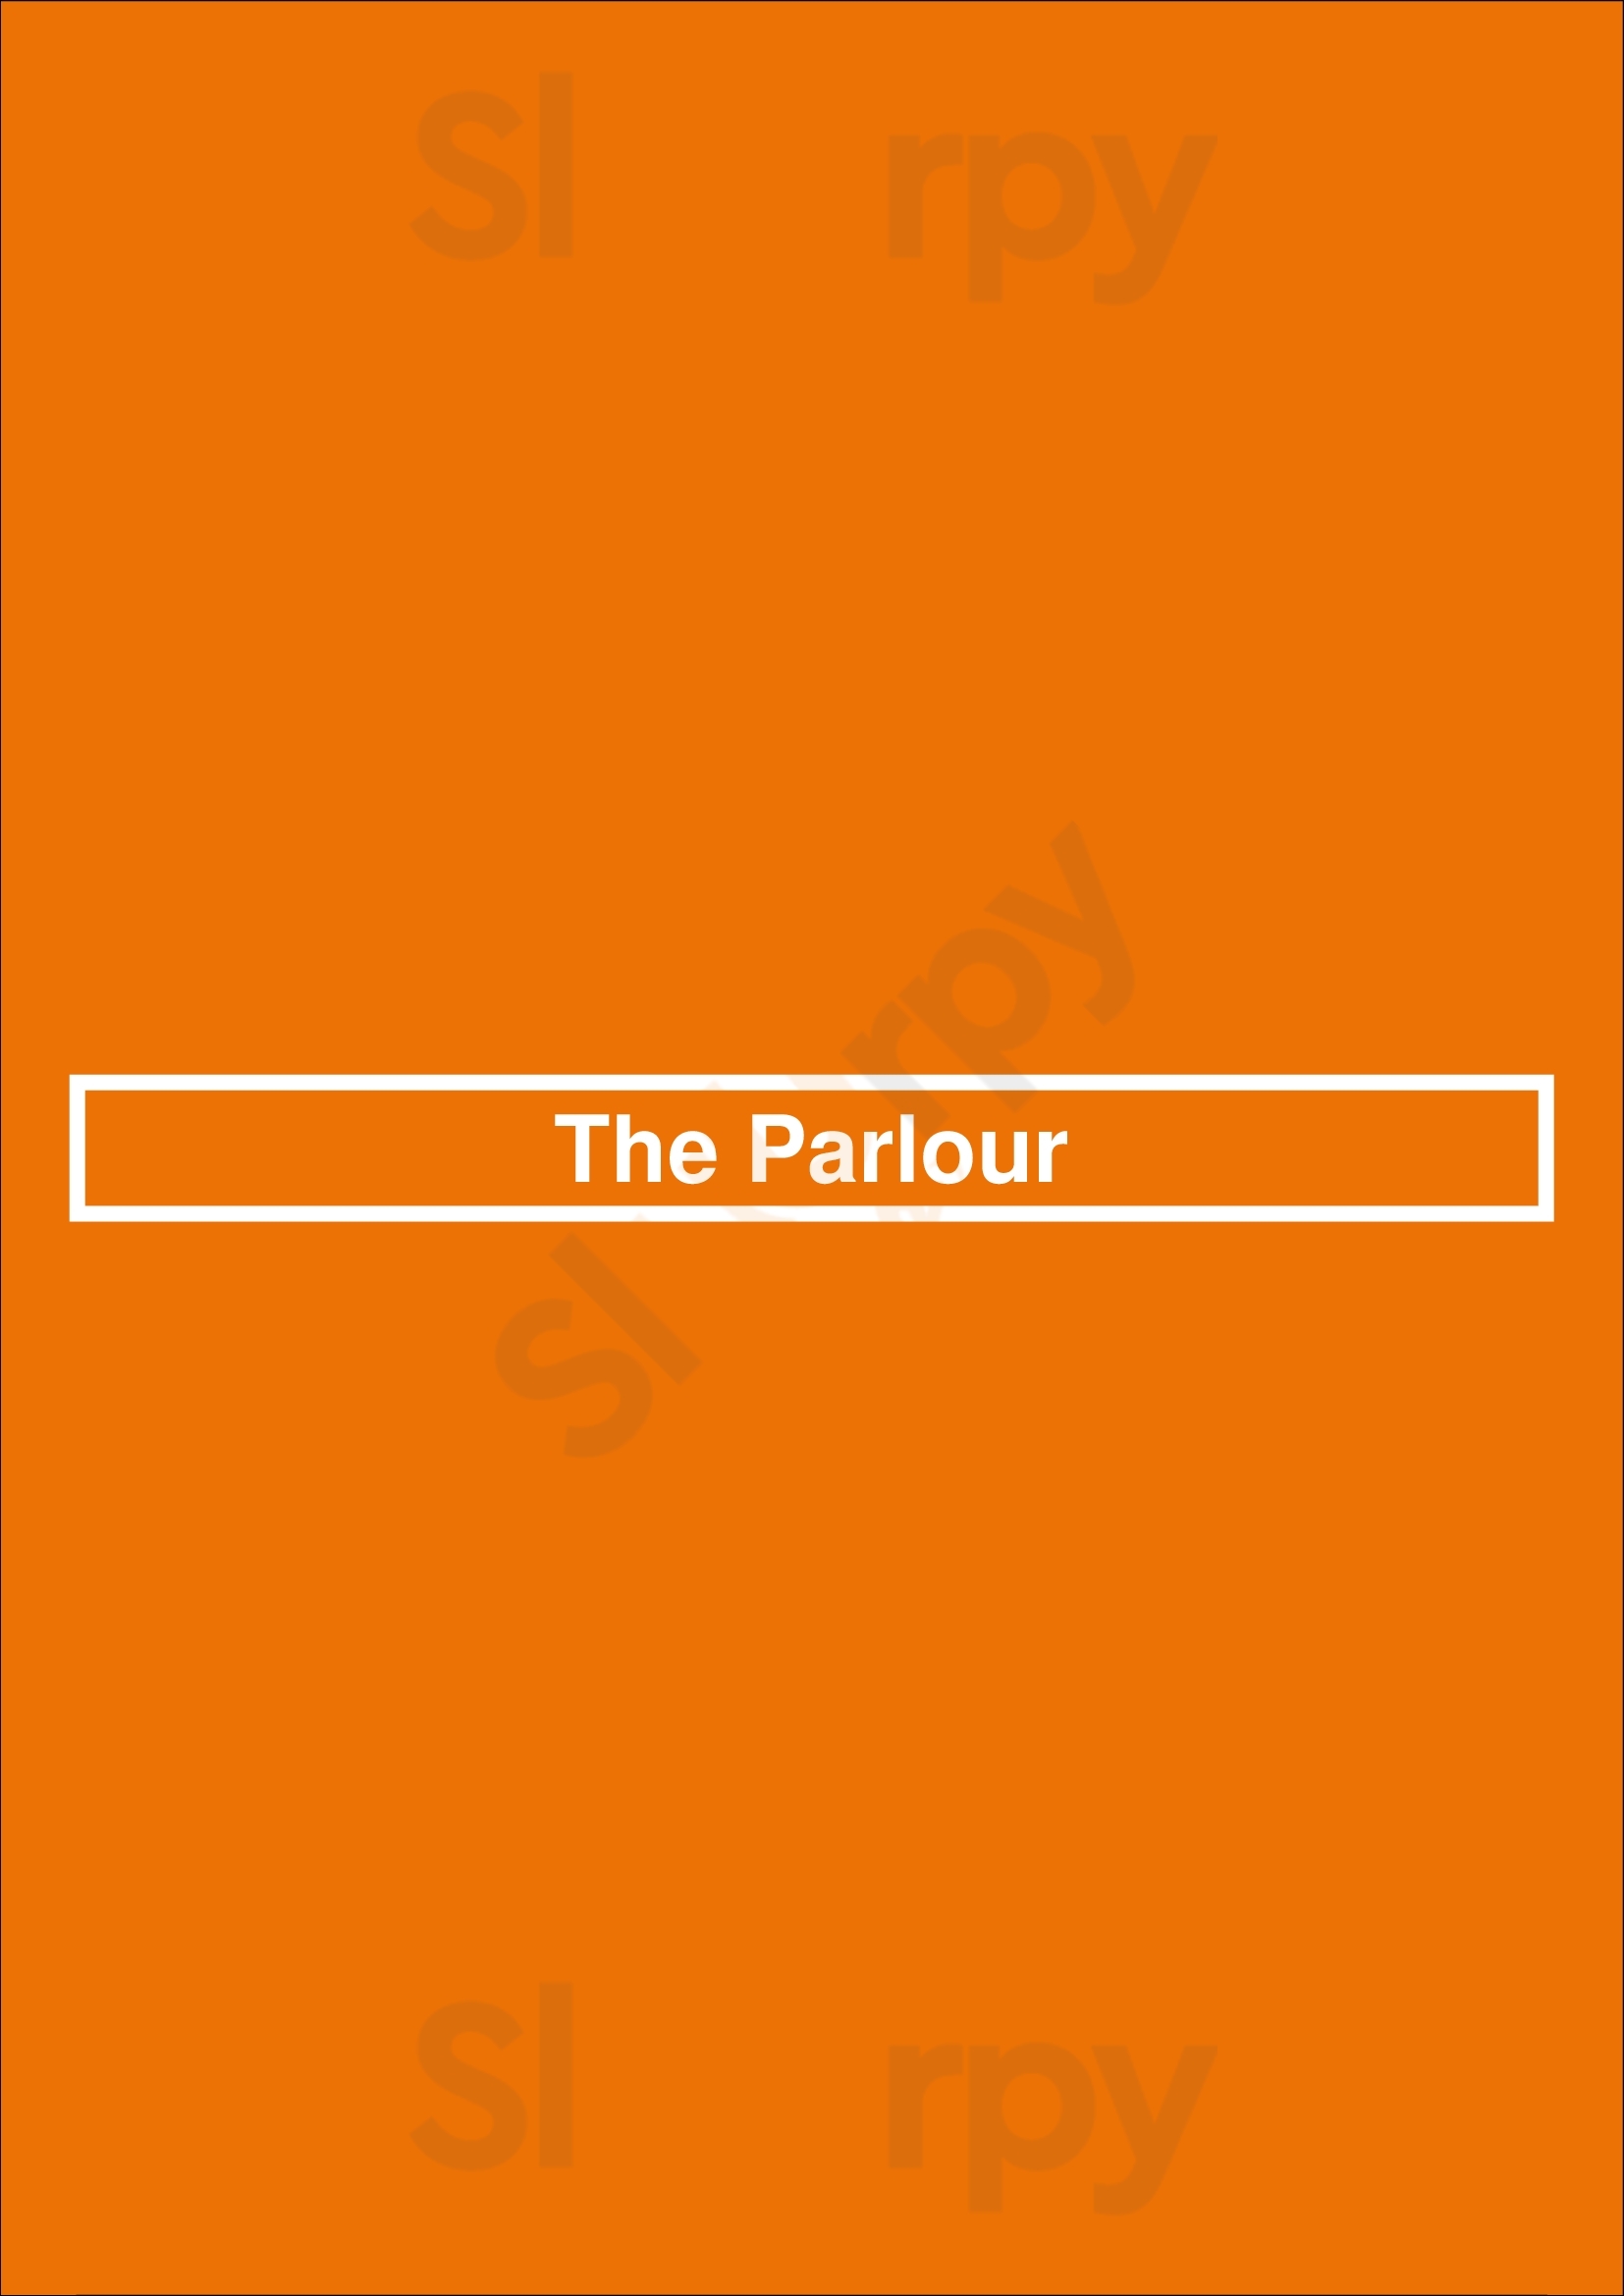 The Parlour Inn Restaurant Stratford Menu - 1